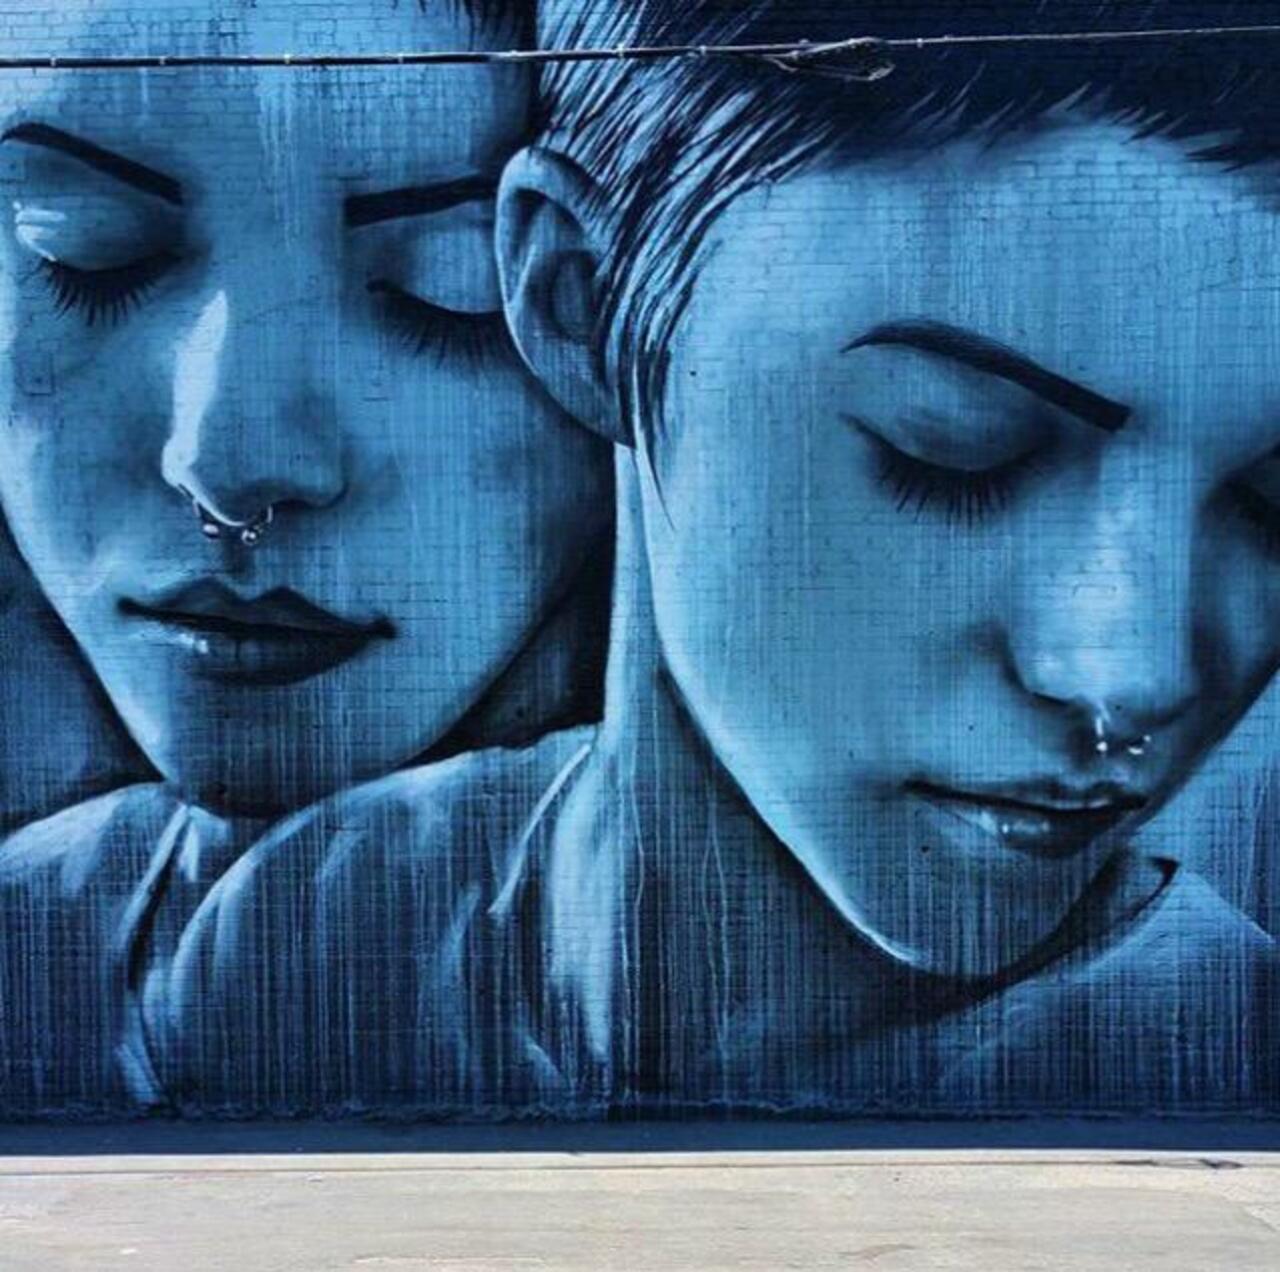 https://goo.gl/t4fpx2 RT GoogleStreetArt: Street Art by Christina Angelina 

#art #graffiti #mural #streetart http://t.co/LPyLs5fFZX